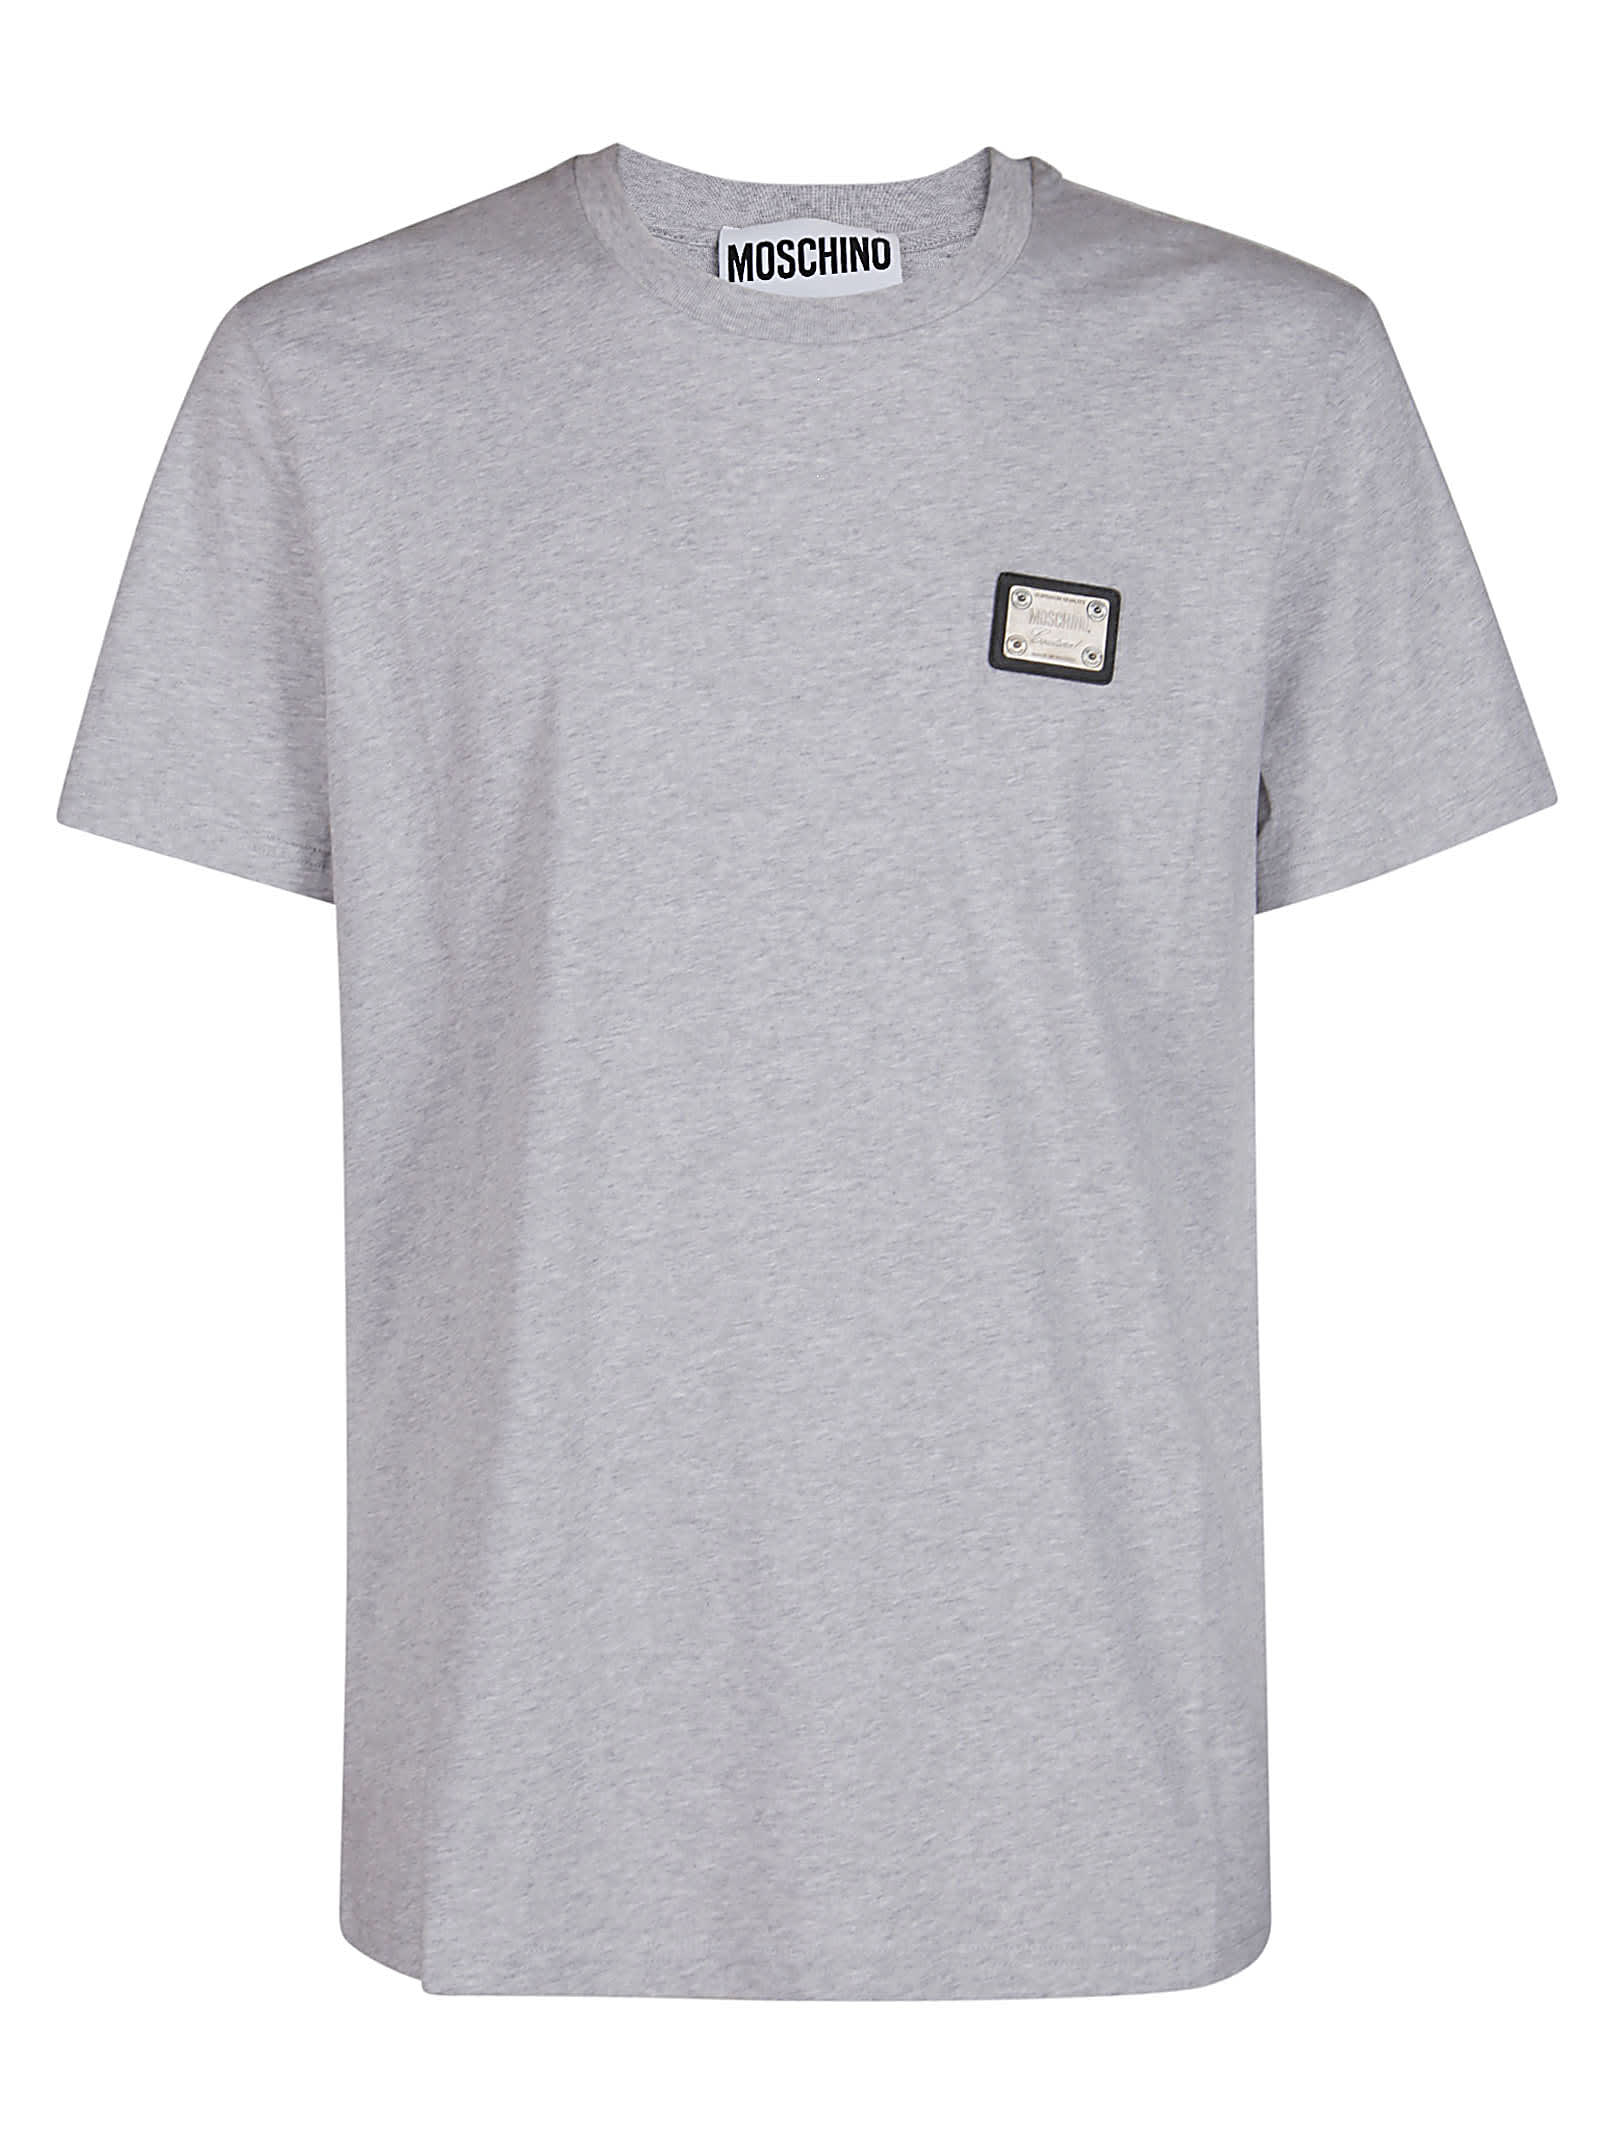 Moschino Grey Cotton T-shirt